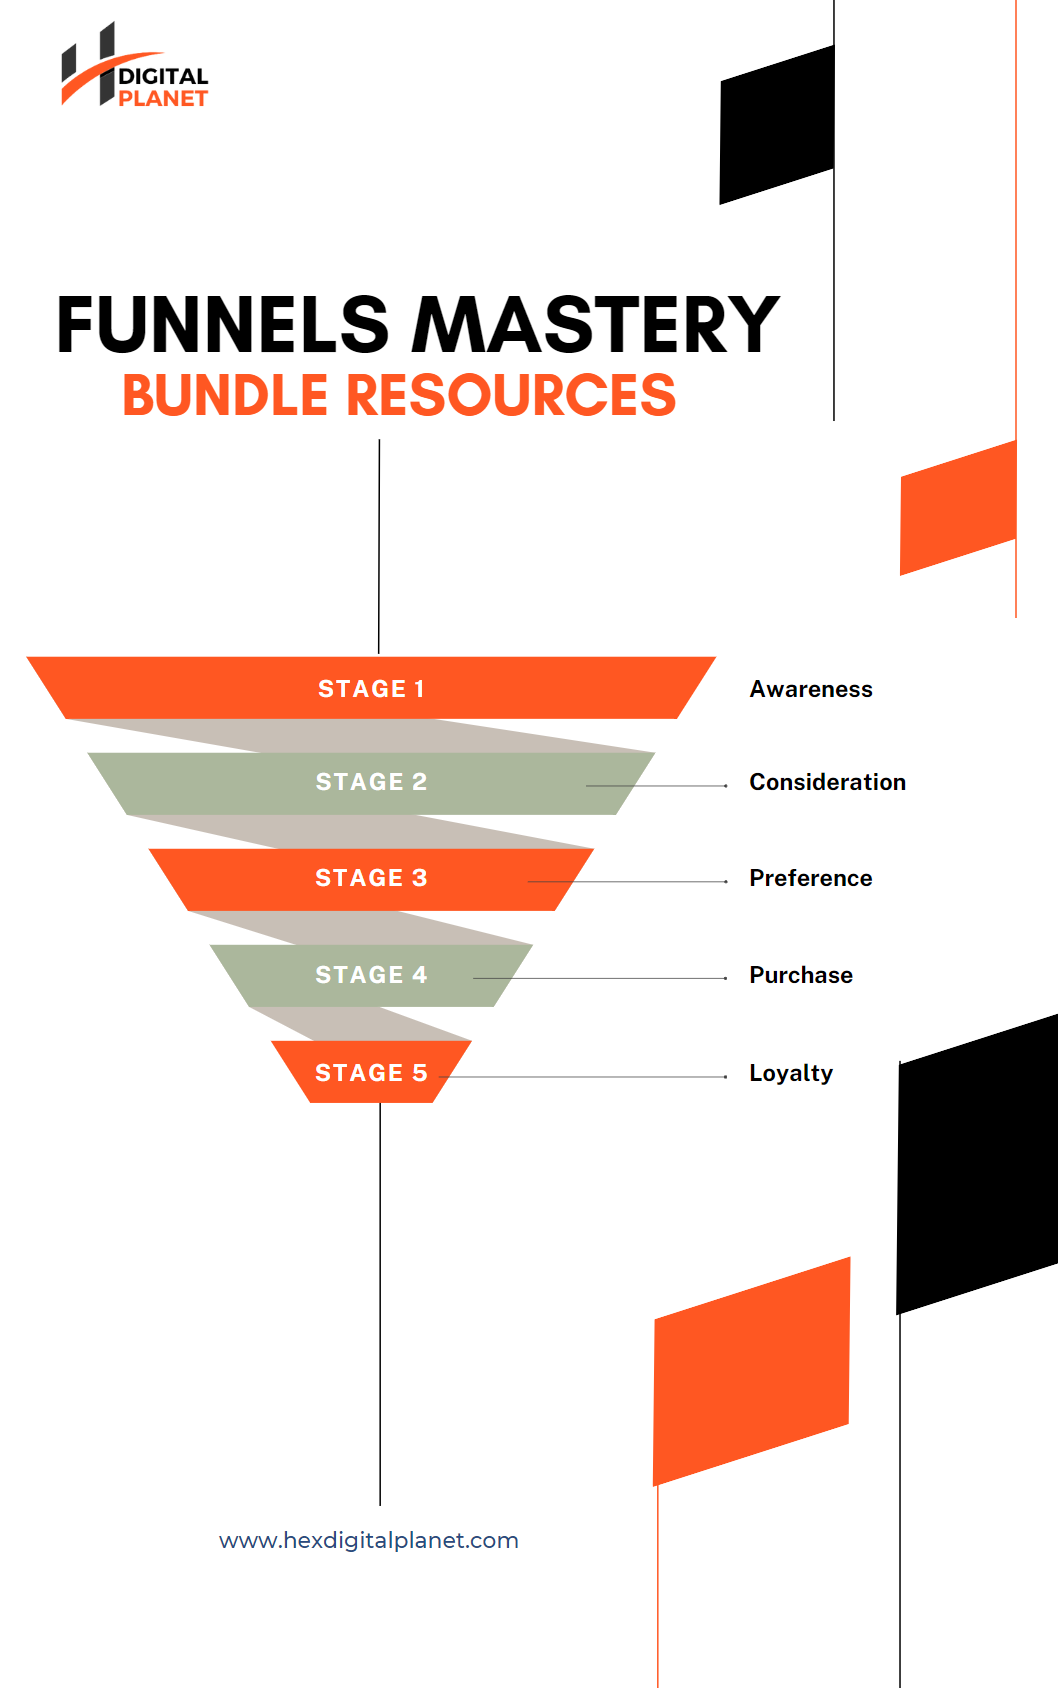 Funnels Mastery Bundle